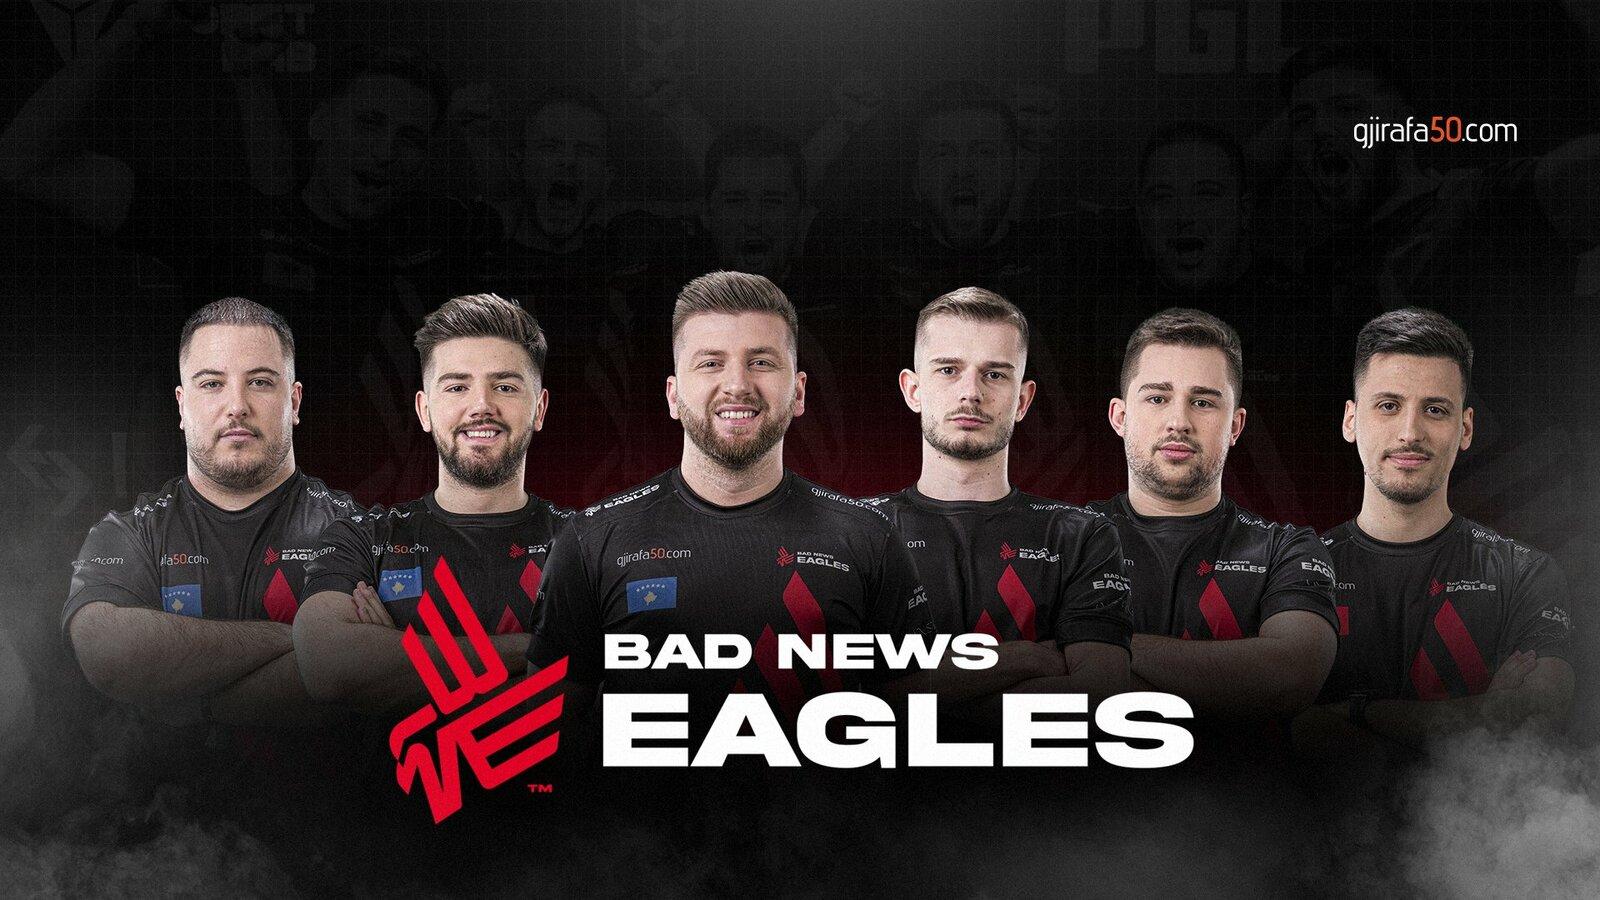 Bad News Eagles